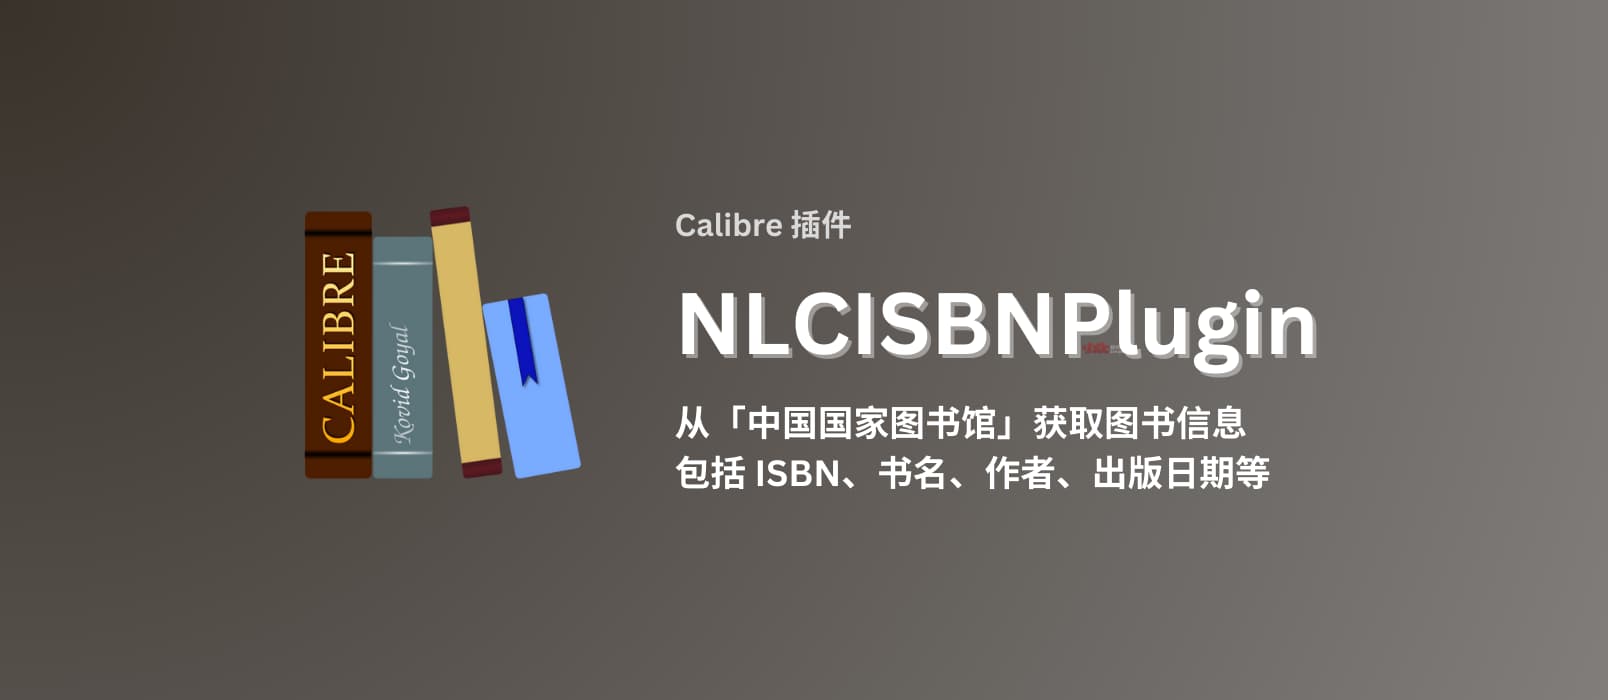 NLCISBNPlugin – Calibre 插件：从「中国国家图书馆」获取图书信息，包括 ISBN、书名、作者、出版日期等